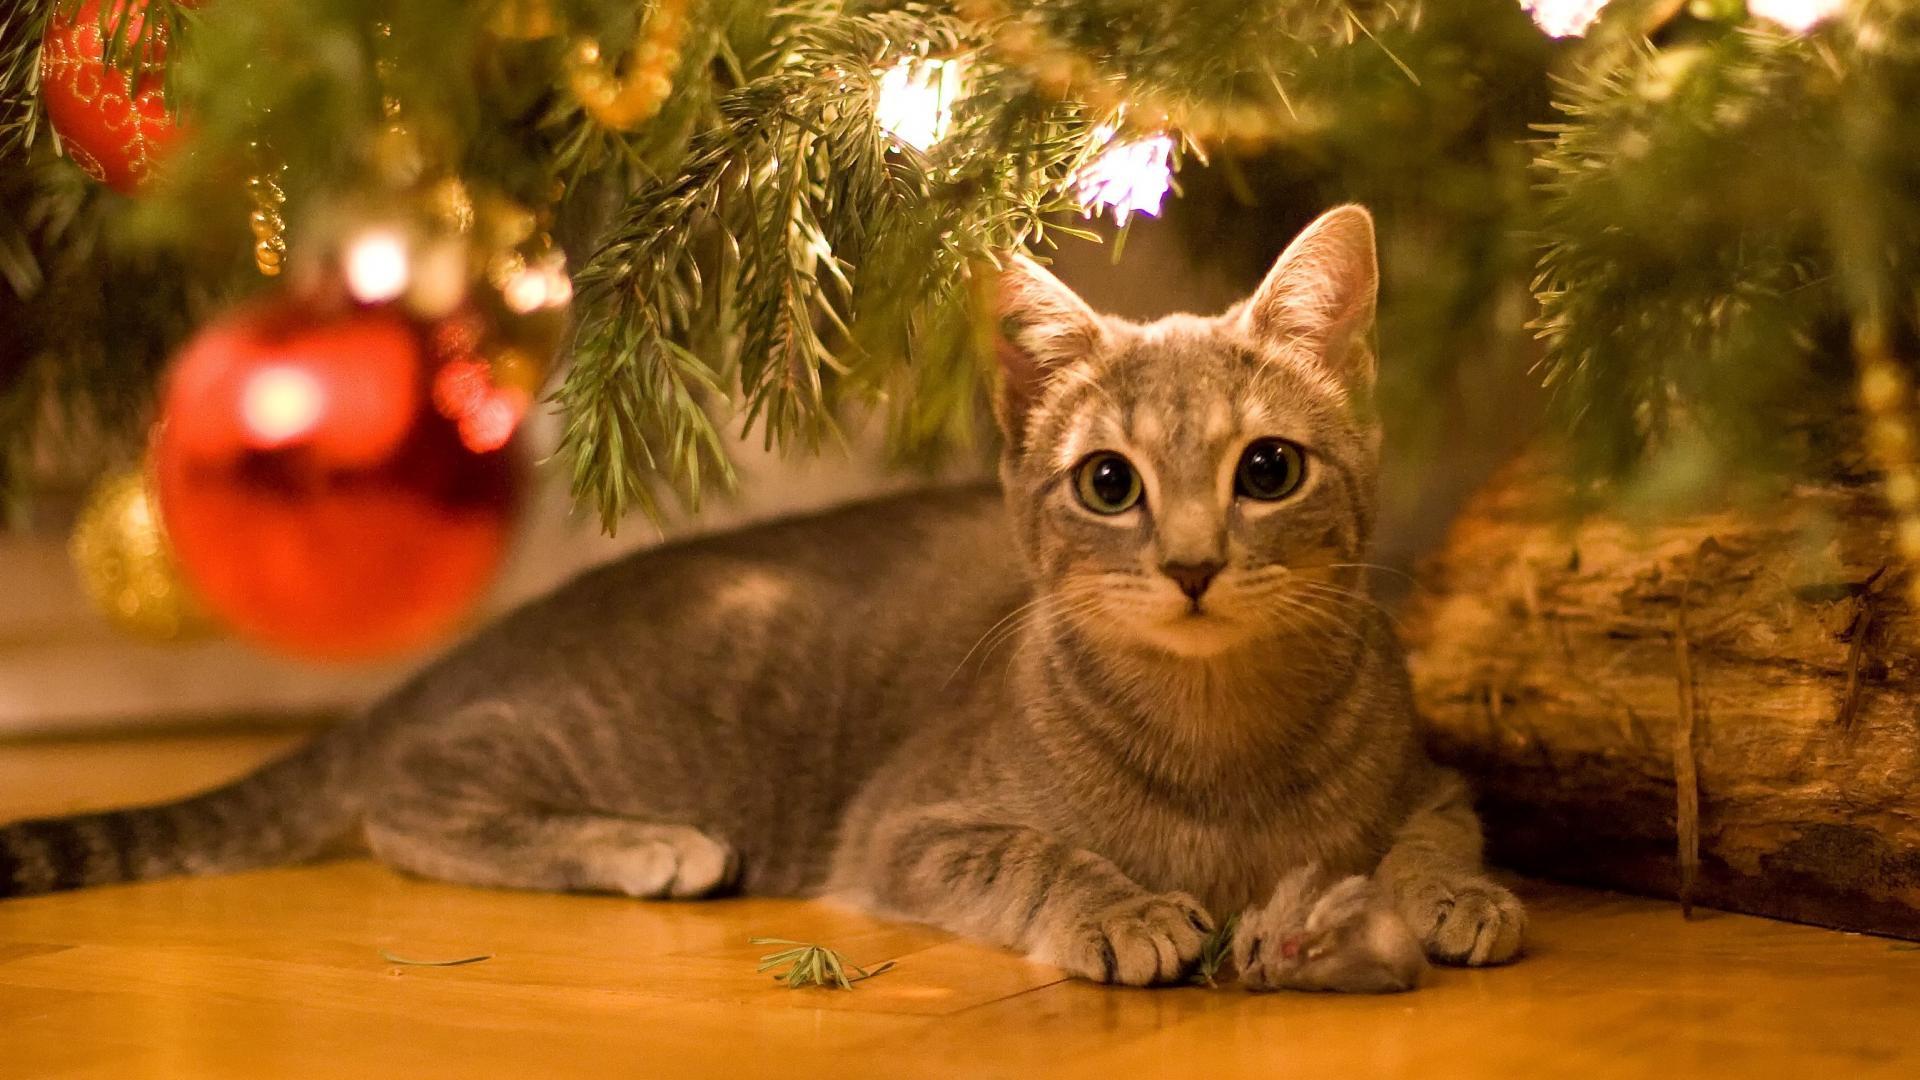 Widescreen Wallpaper of Christmas Cat, Nice Pics